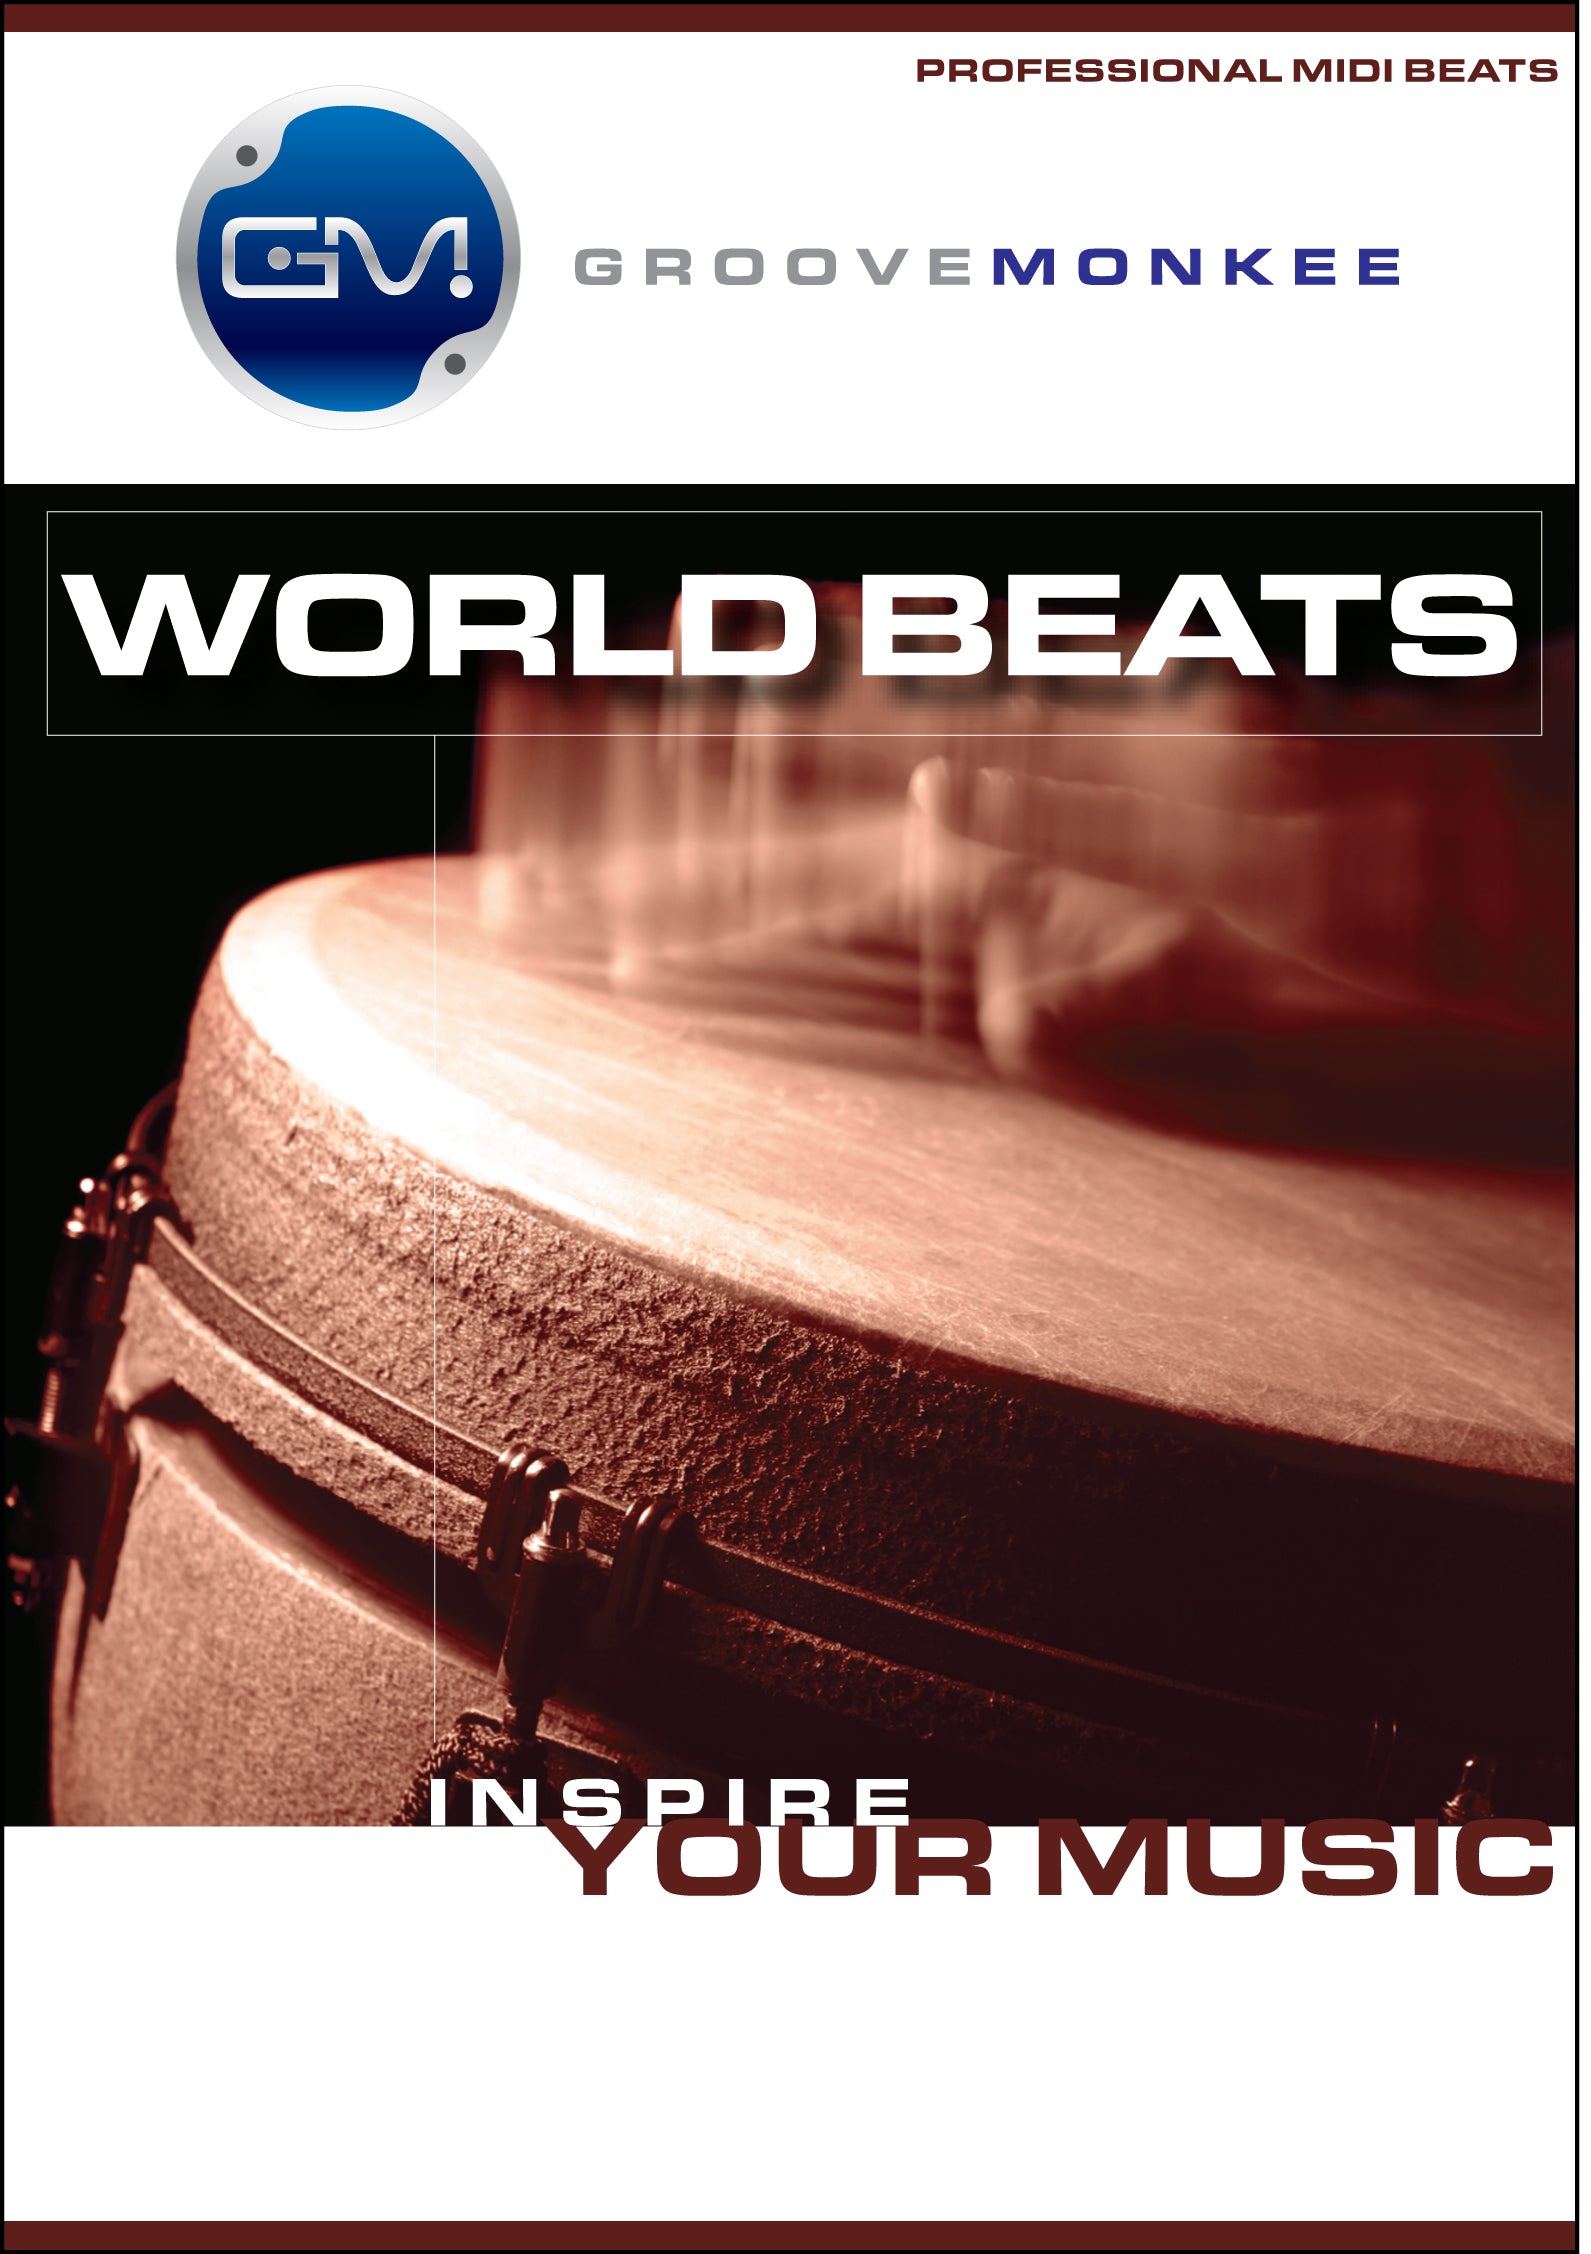 World Beats MIDI Loops